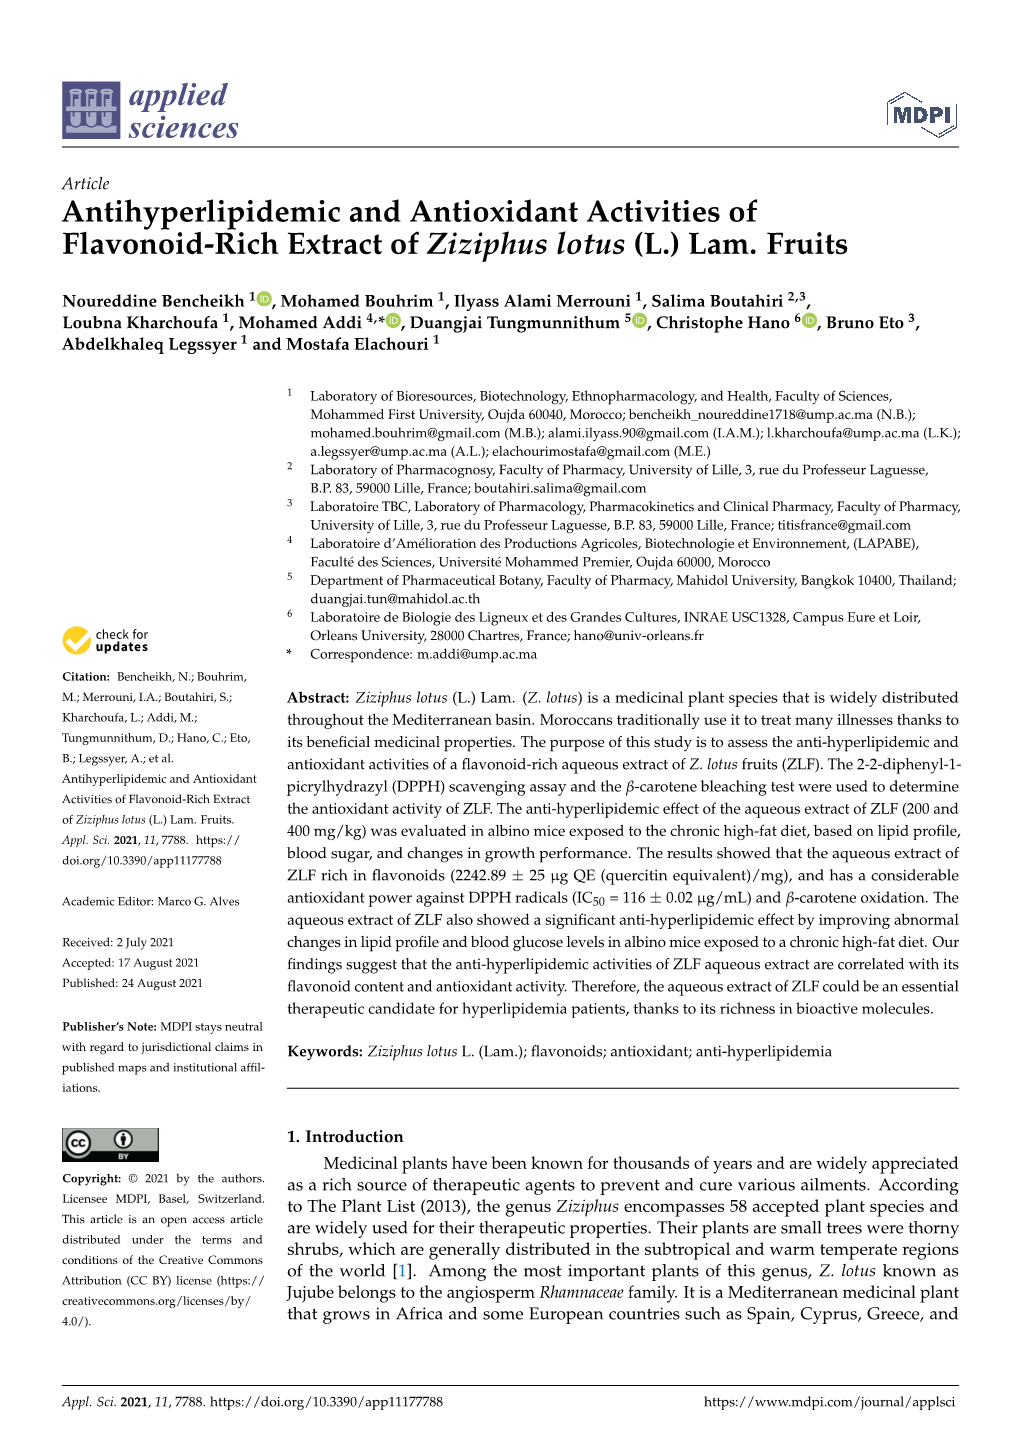 Antihyperlipidemic and Antioxidant Activities of Flavonoid-Rich Extract of Ziziphus Lotus (L.) Lam